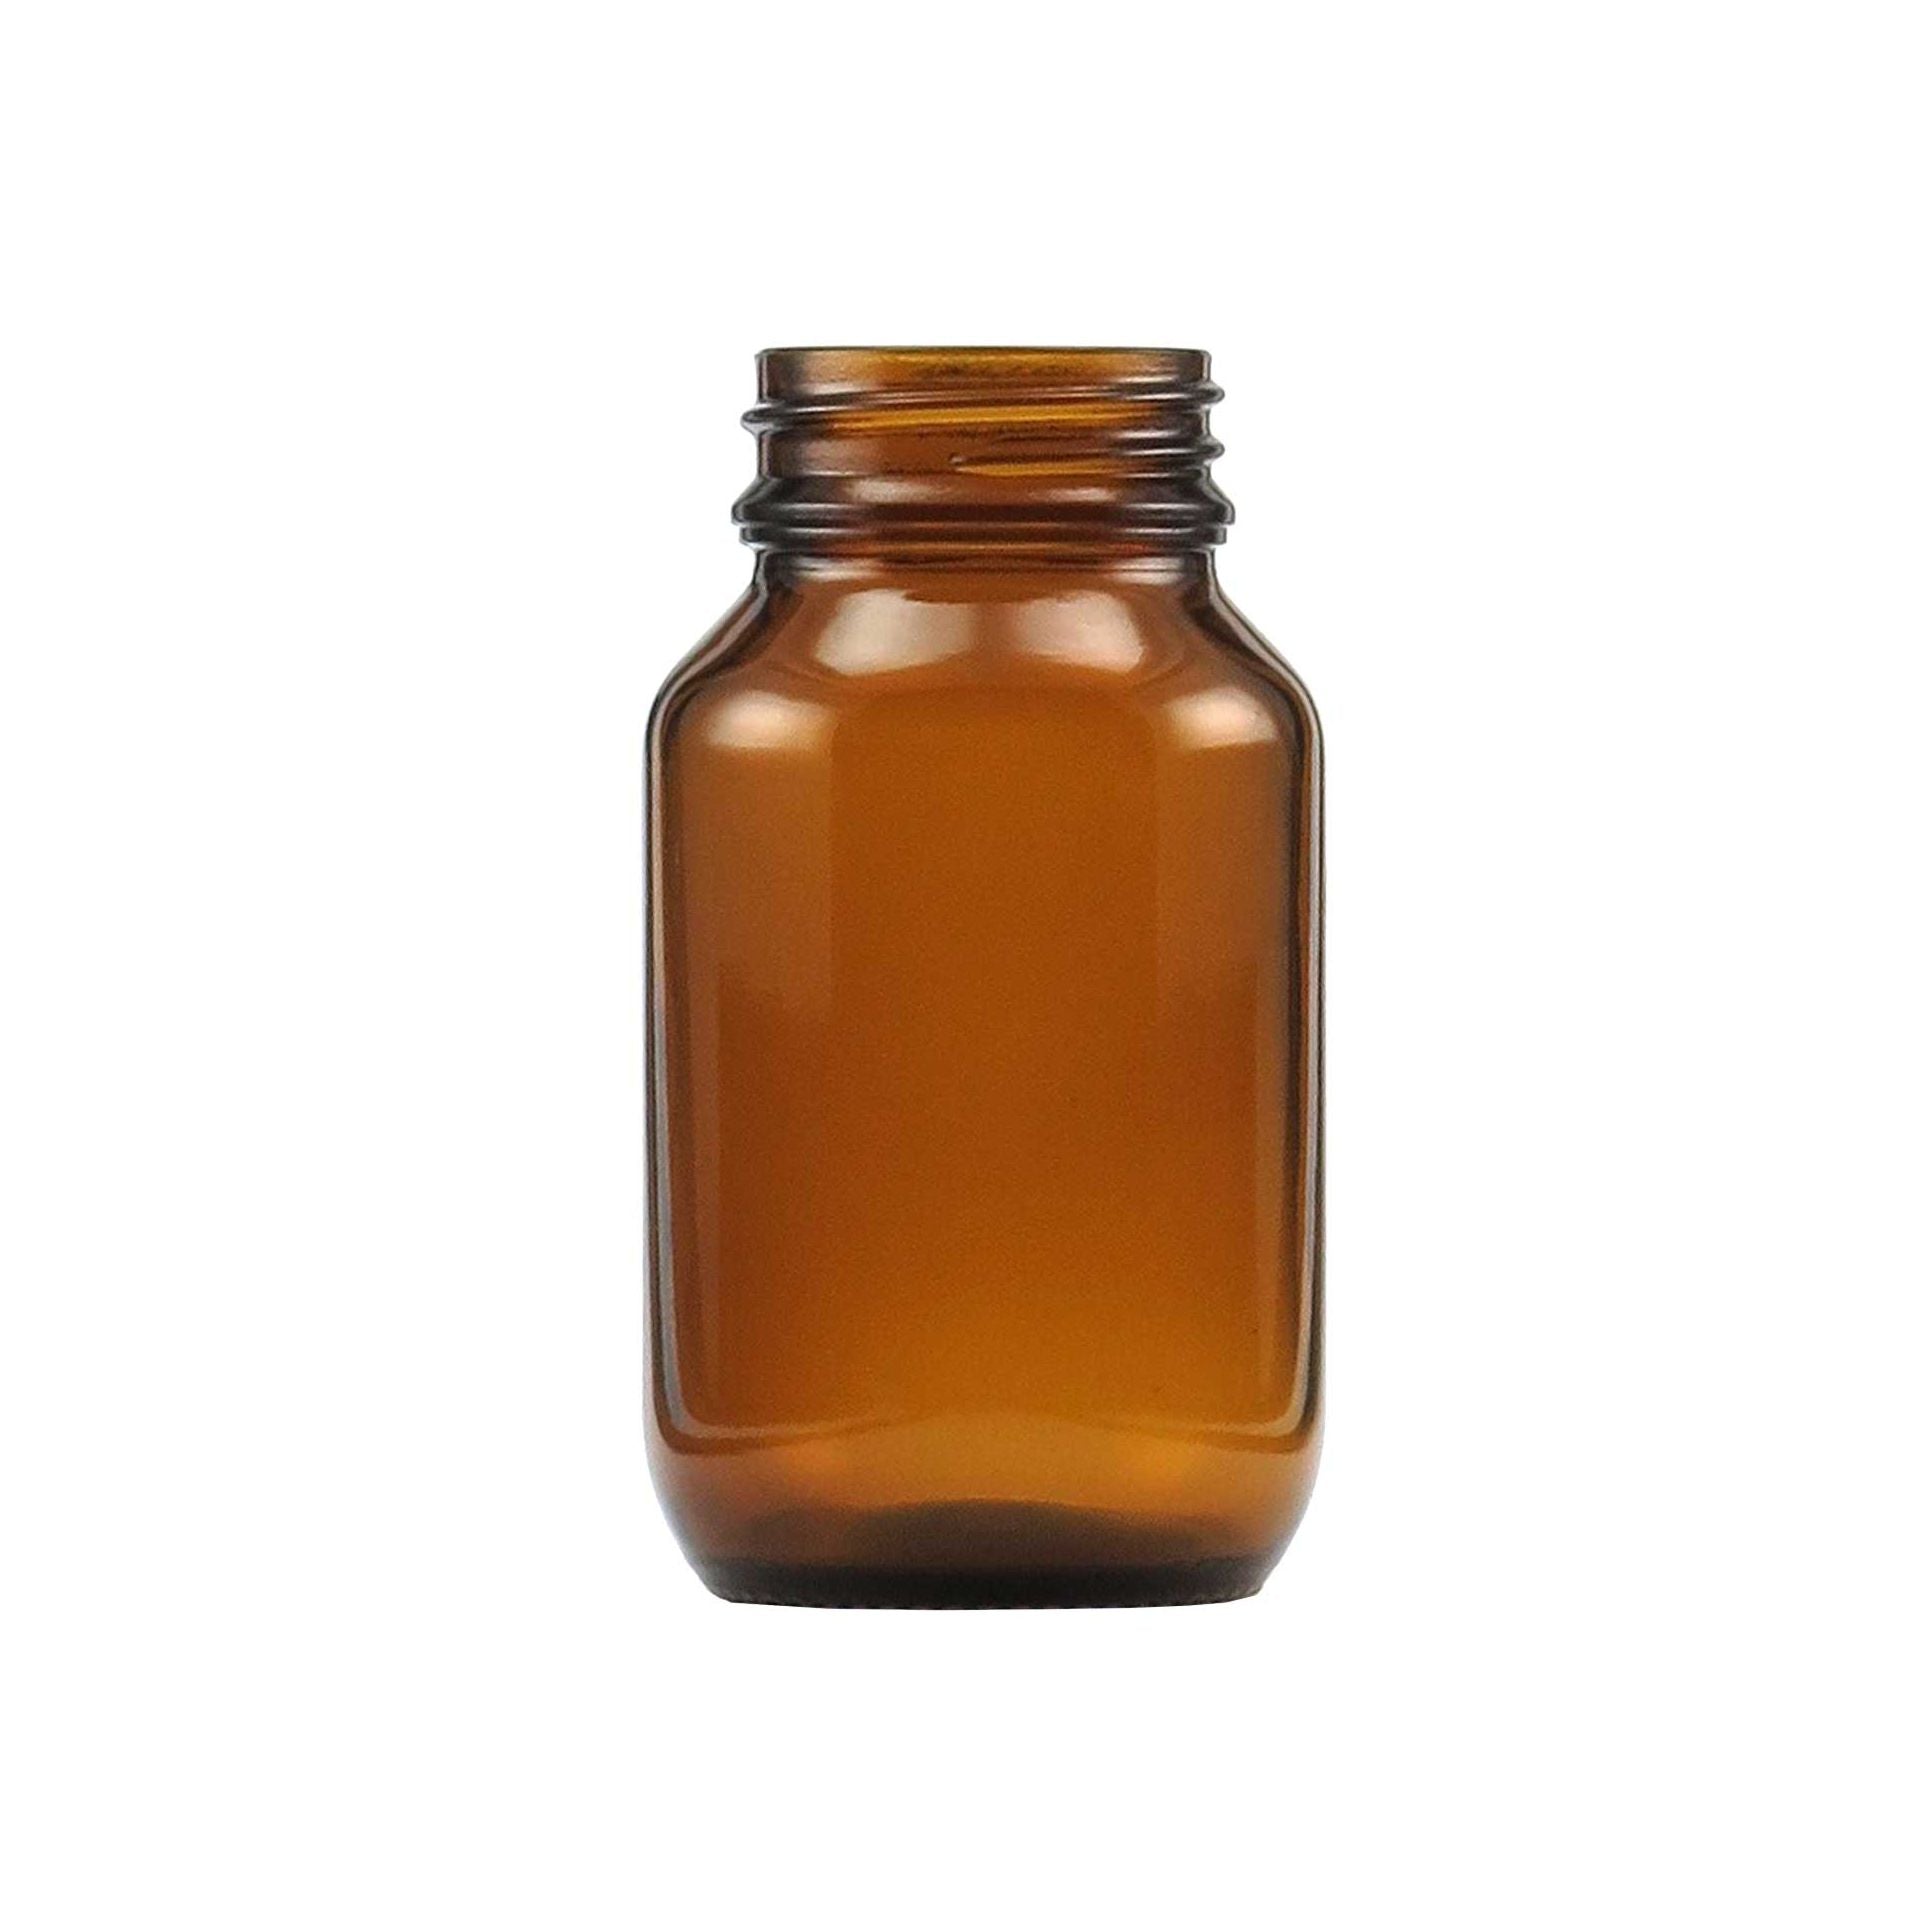 100ml Hajmola Glass Amber Bottle with Black Cap